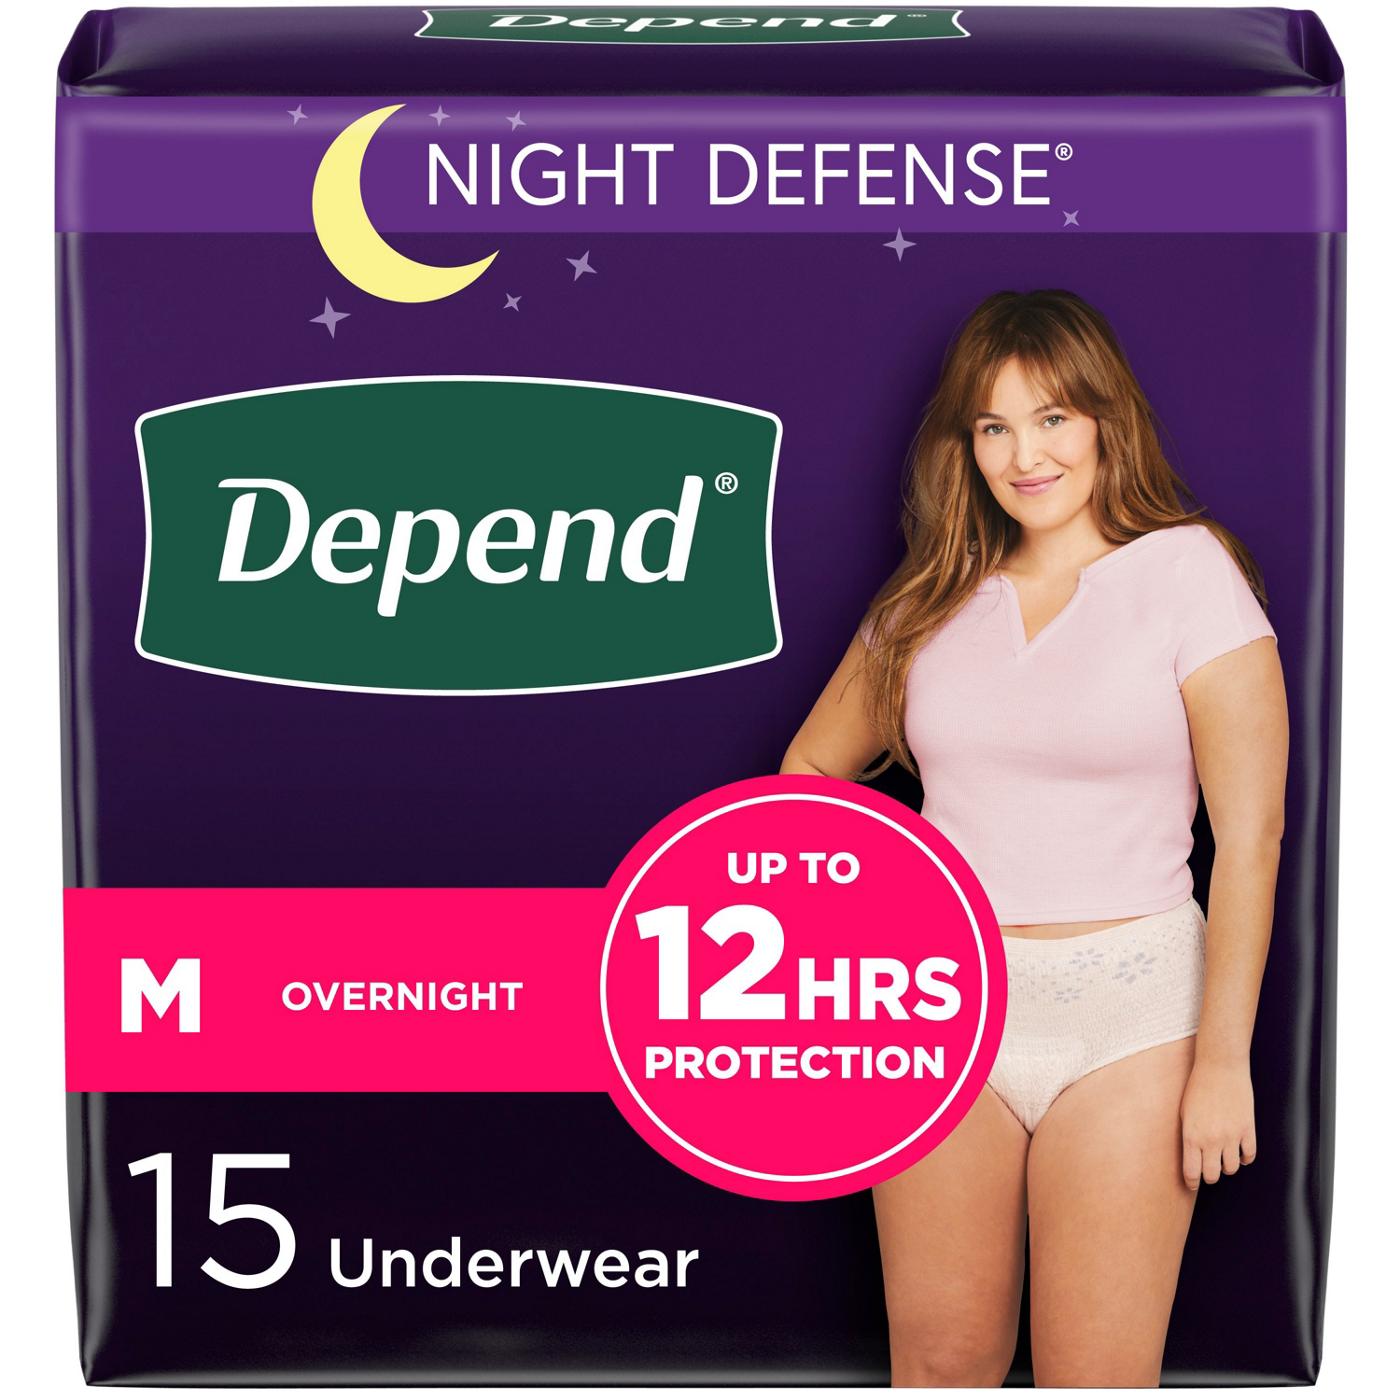 Depend Night Defense Adult Incontinence Overnight Underwear